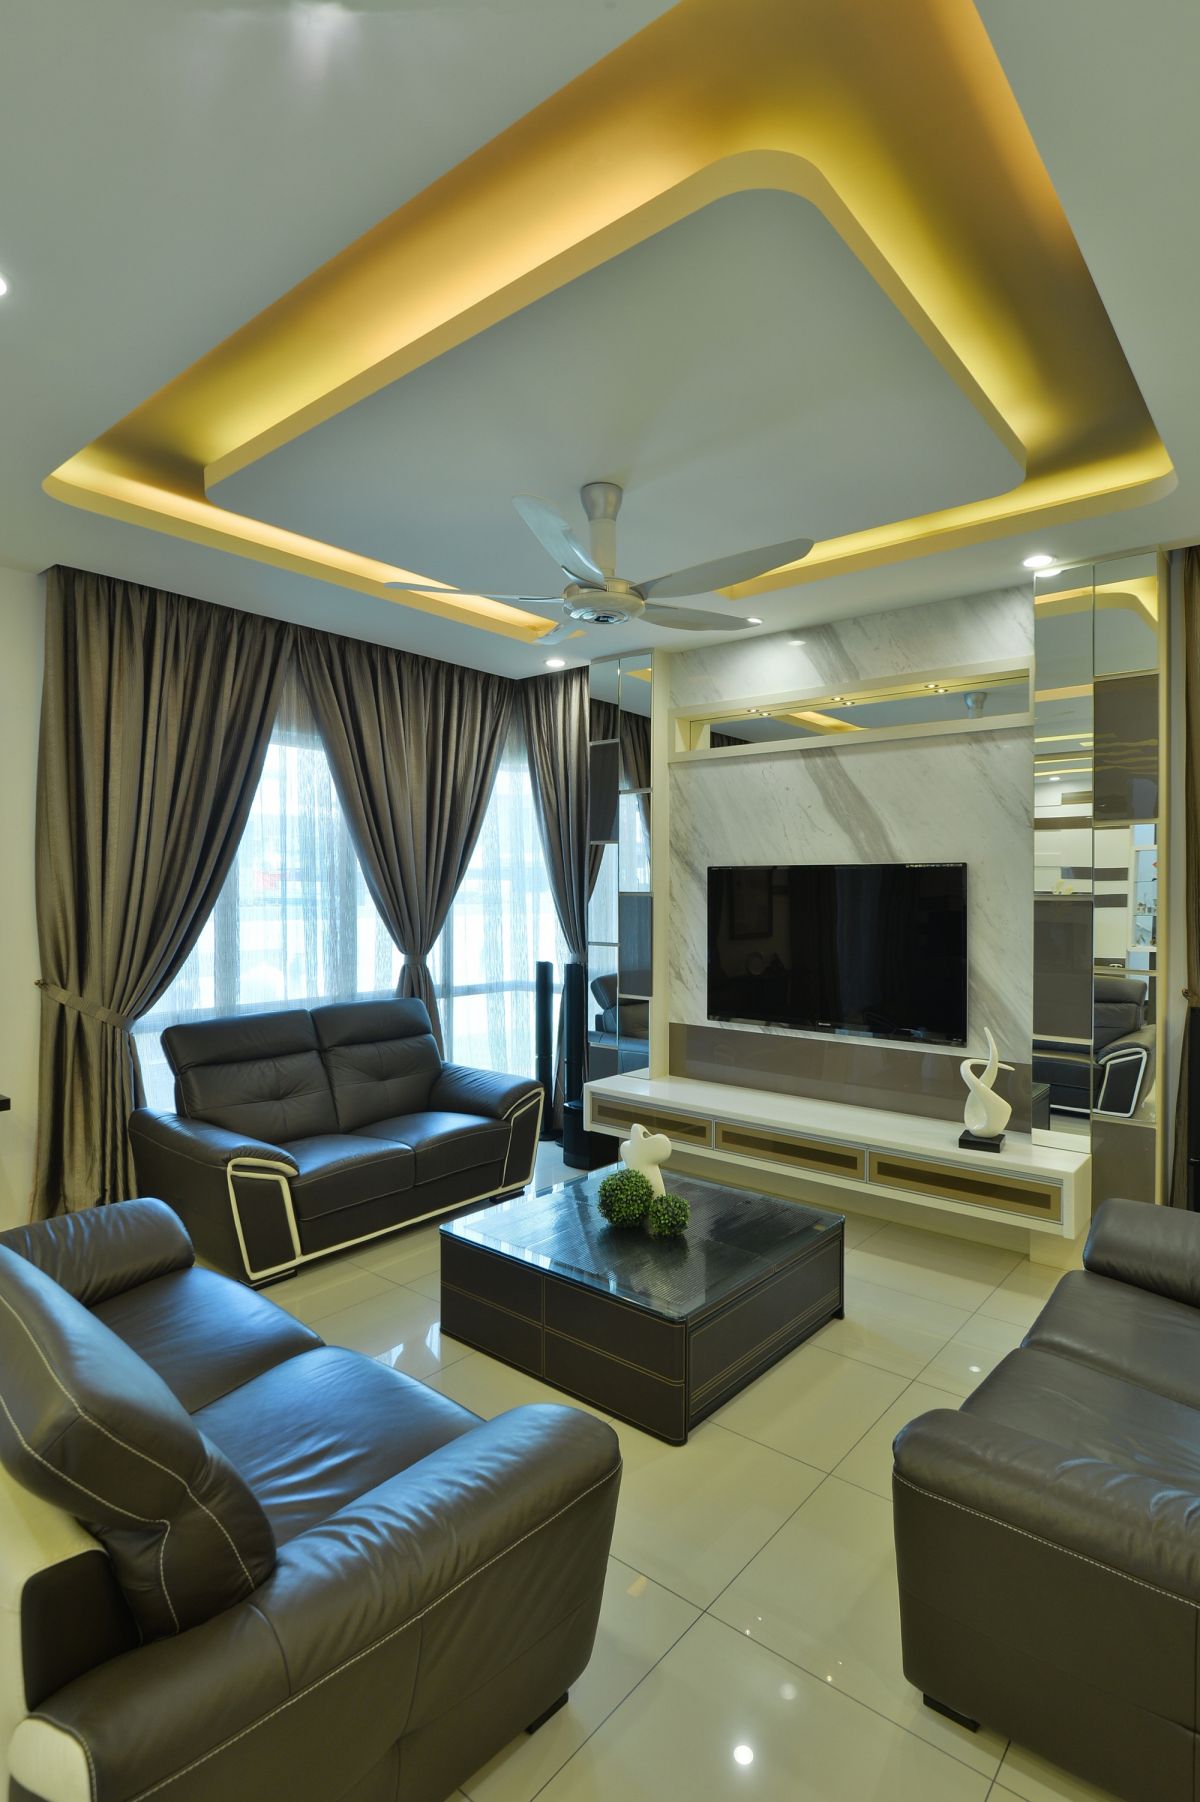 Cozy Semi-Detached Interior Design | Award Winning Interior Design | Well Interior Design Project